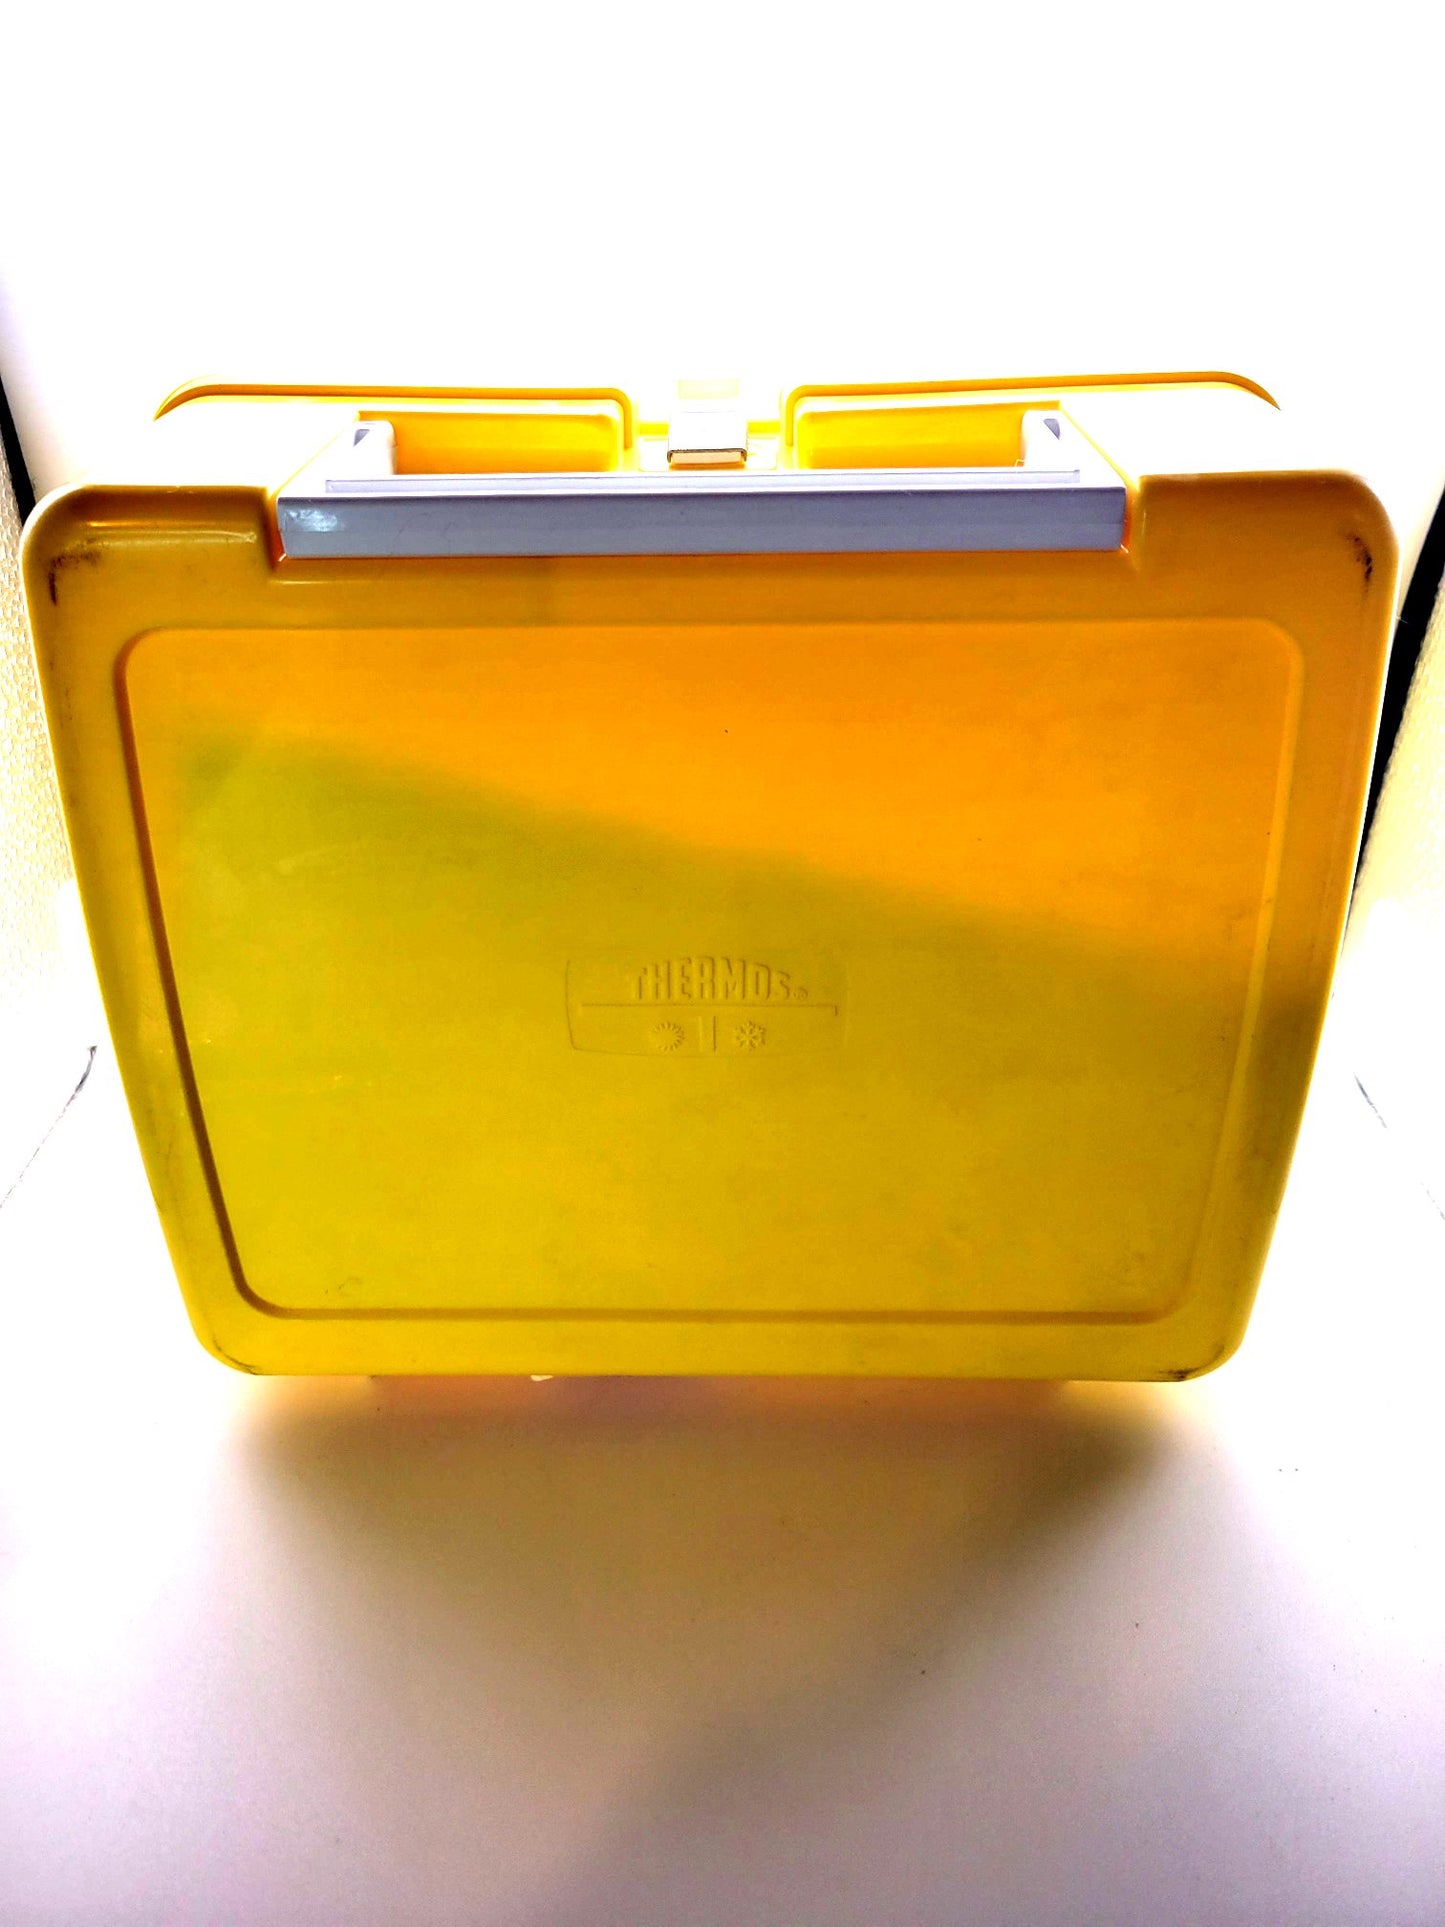 Thermos Brand (1978) Garfield Yellow Lunchbox